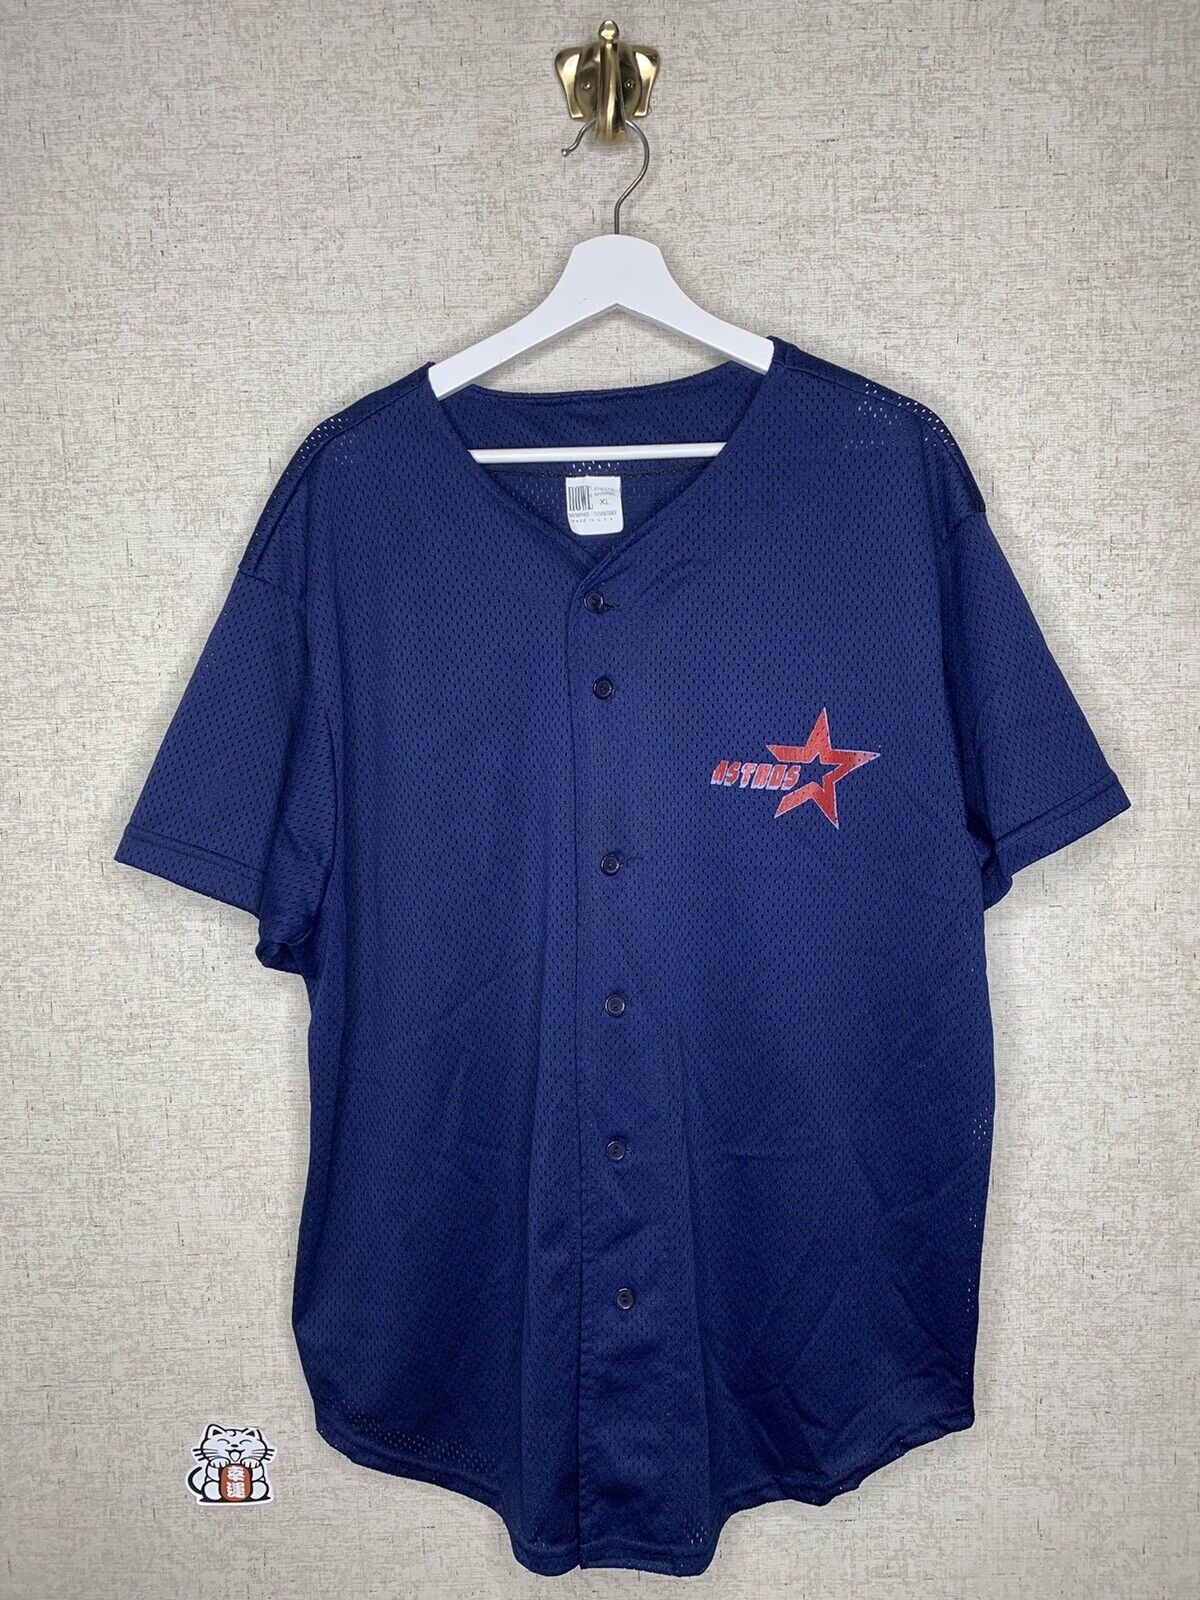 Vintage Howe Athletic Apparel Size XL Houston Astros #6 Jersey Shirt USA Blue